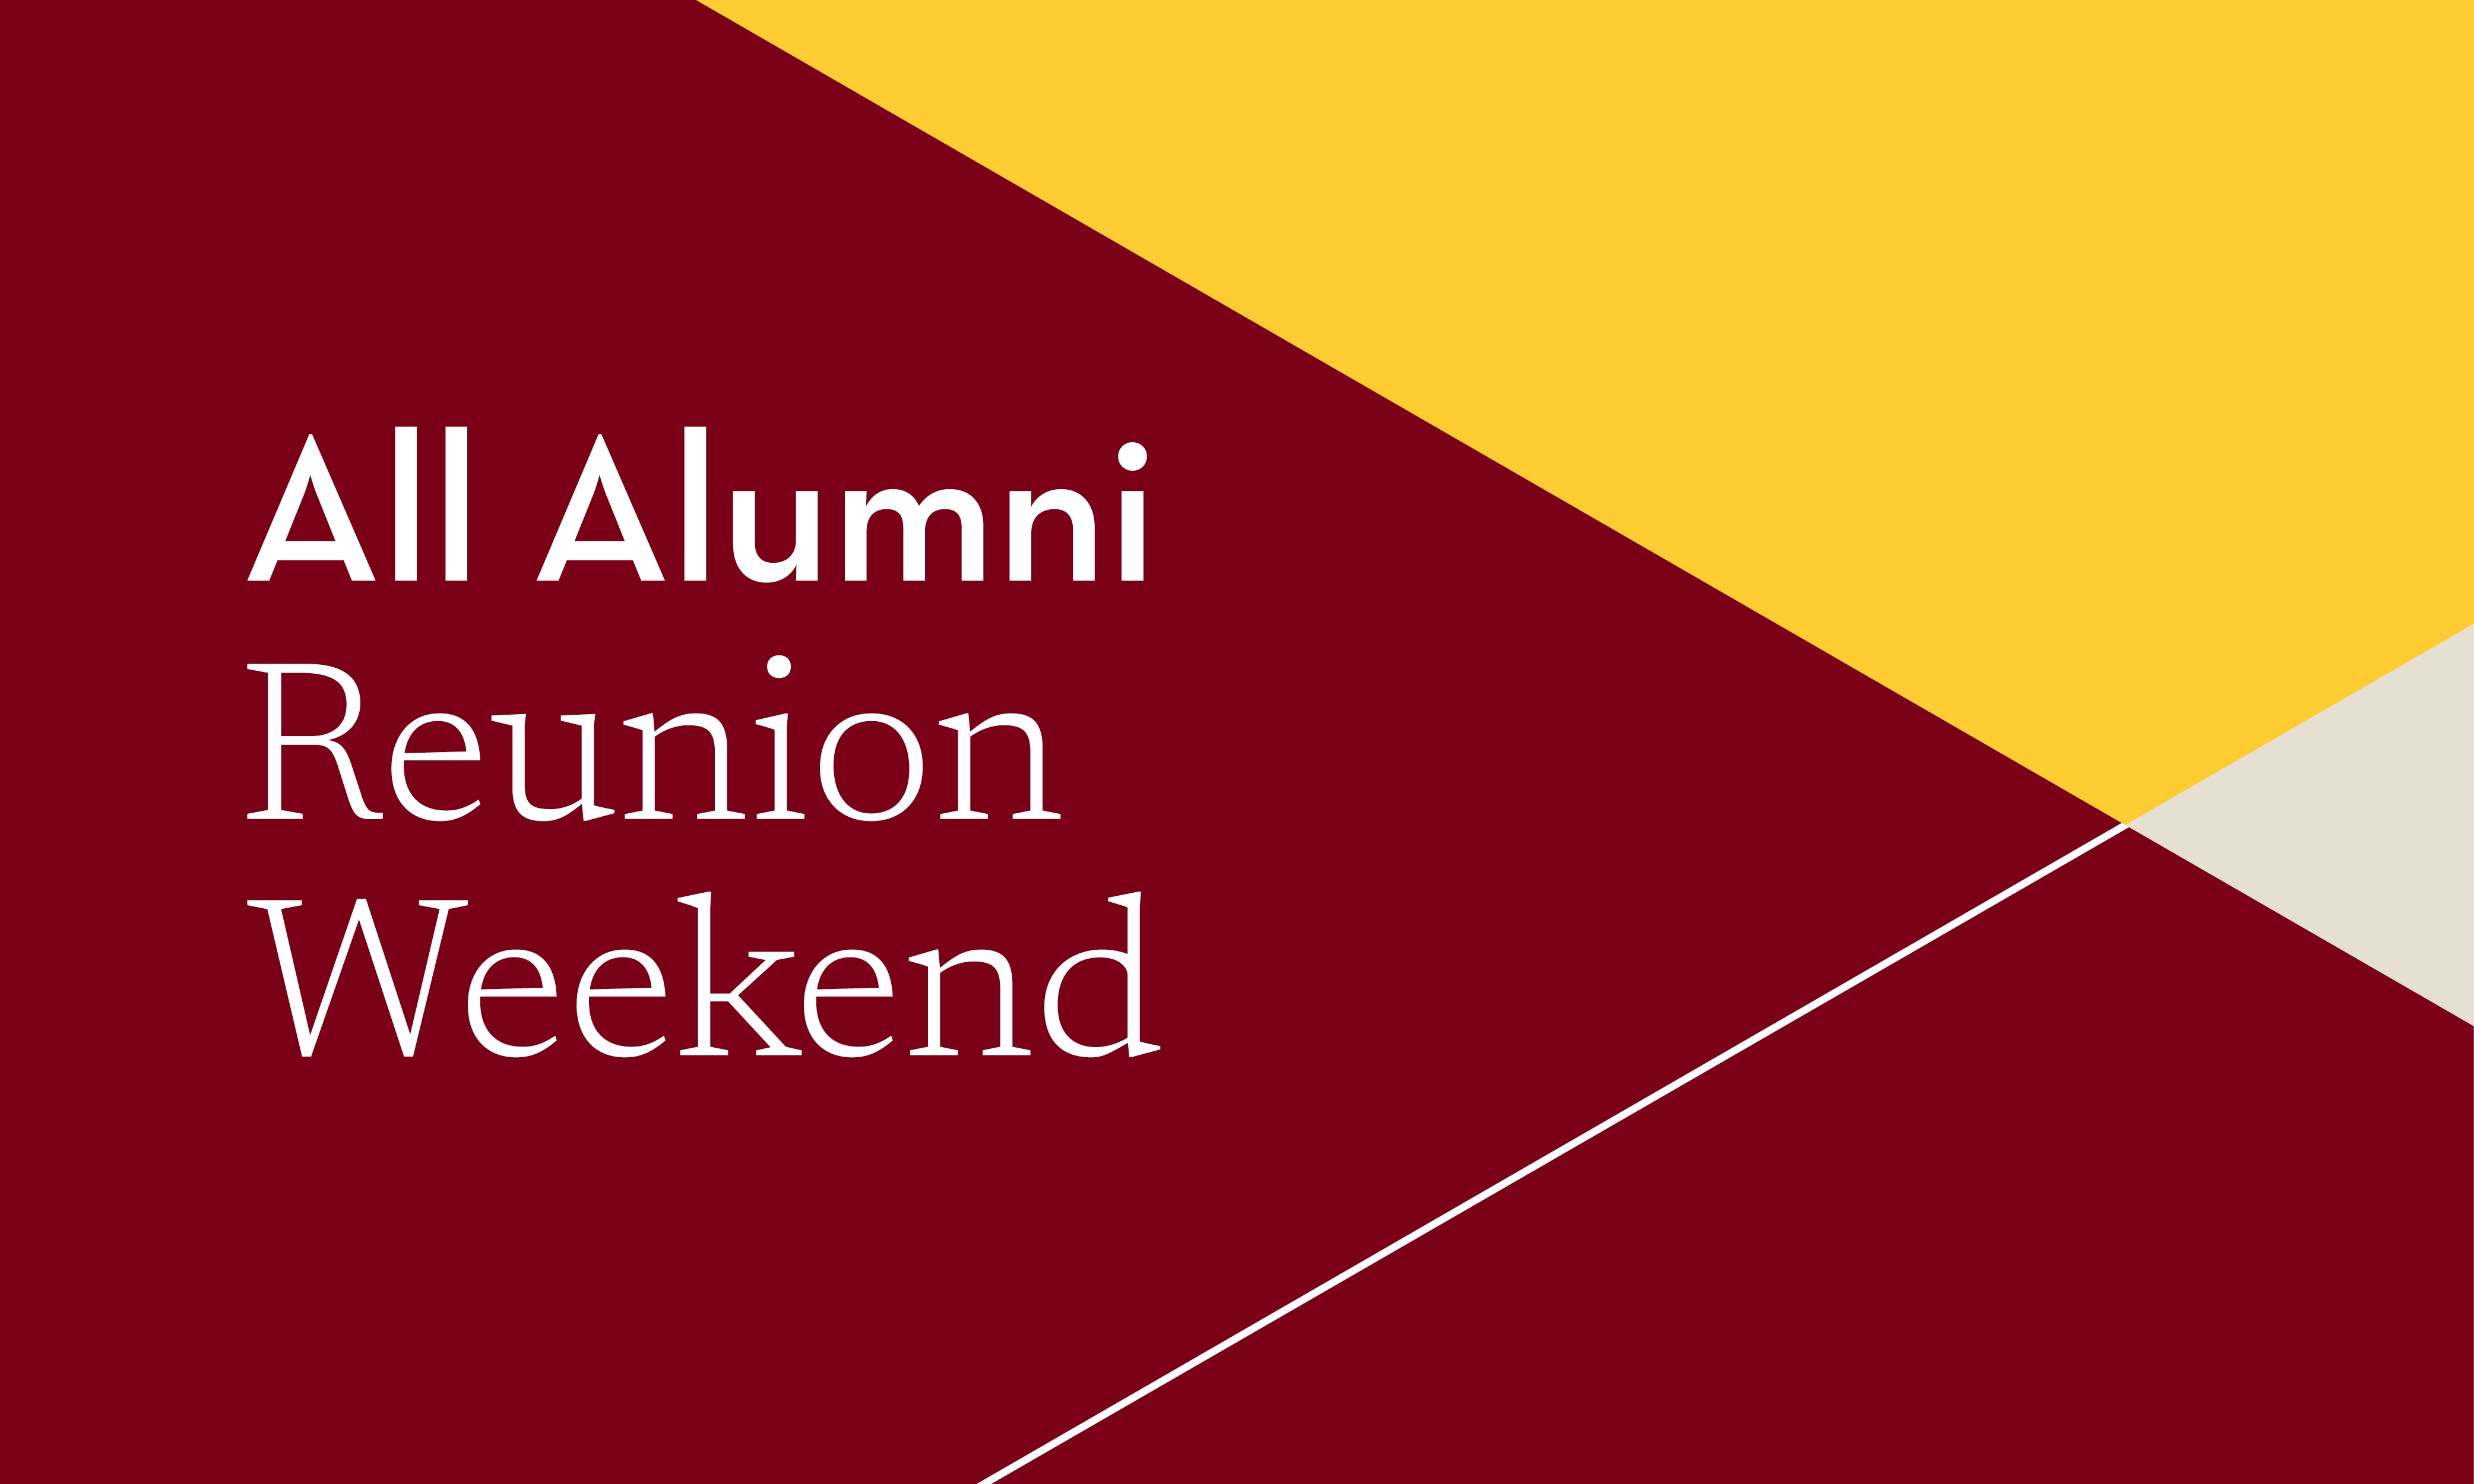 All Alumni Reunion Weekend